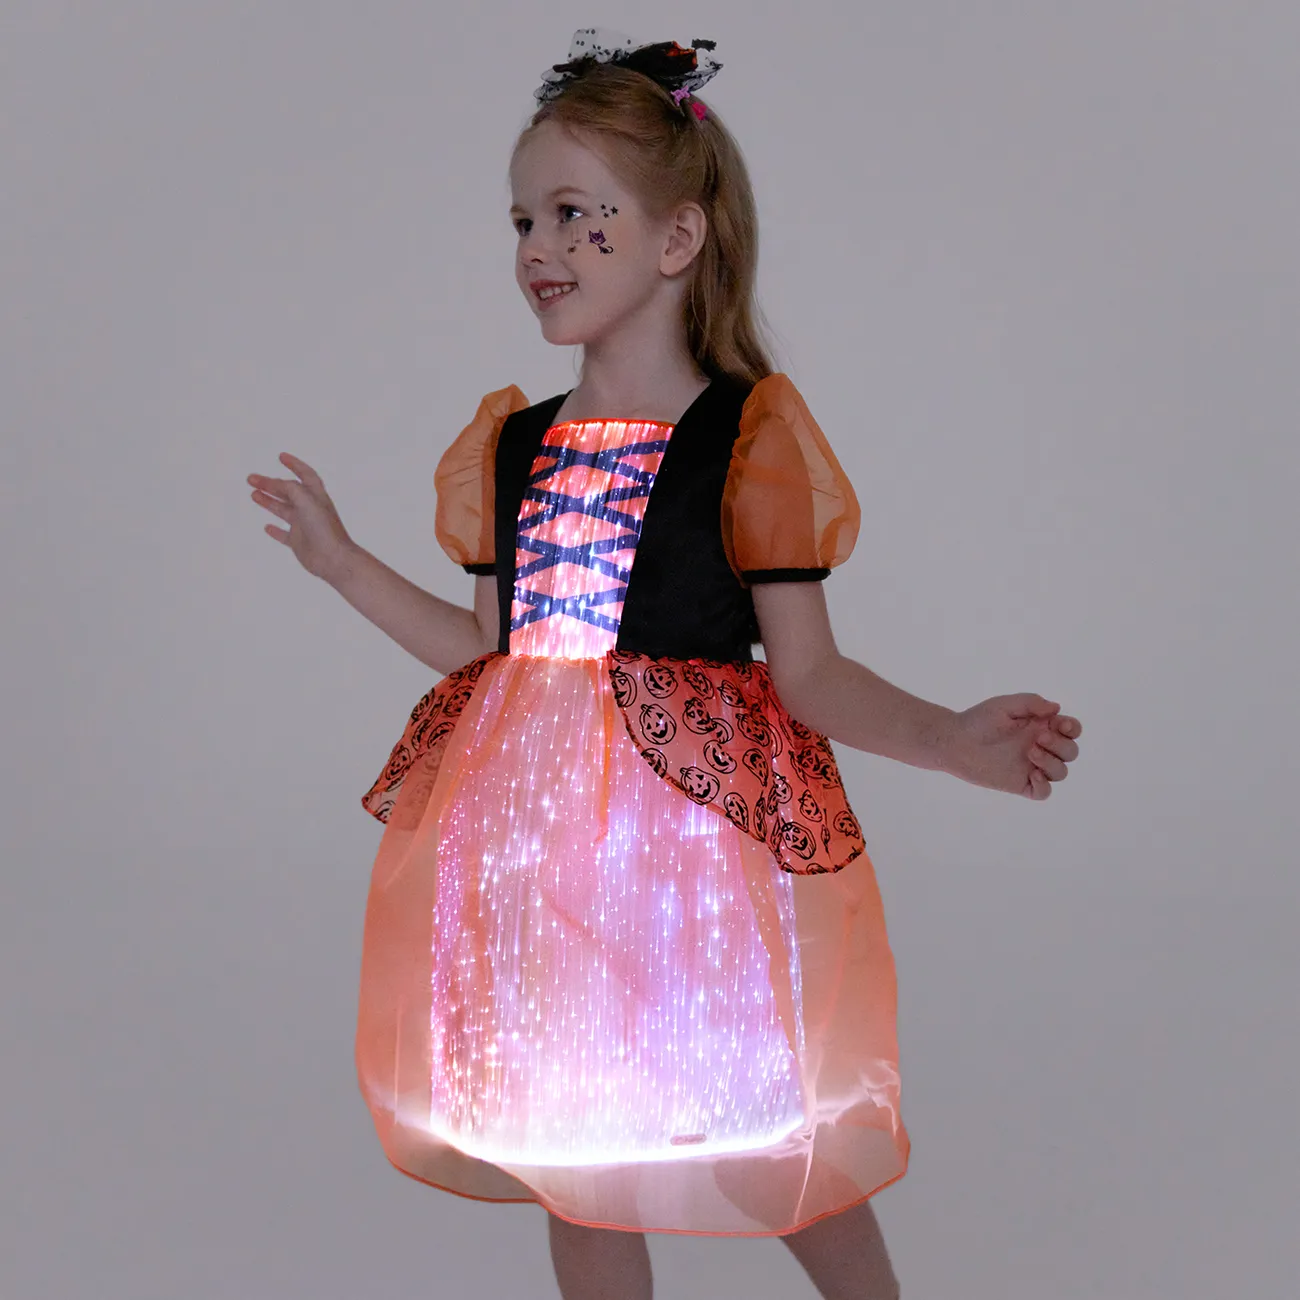 Go-Glow Halloween Illuminating Pumpkin Dress with Light Up Skirt Including Controller (Built-In Battery) Orange big image 1